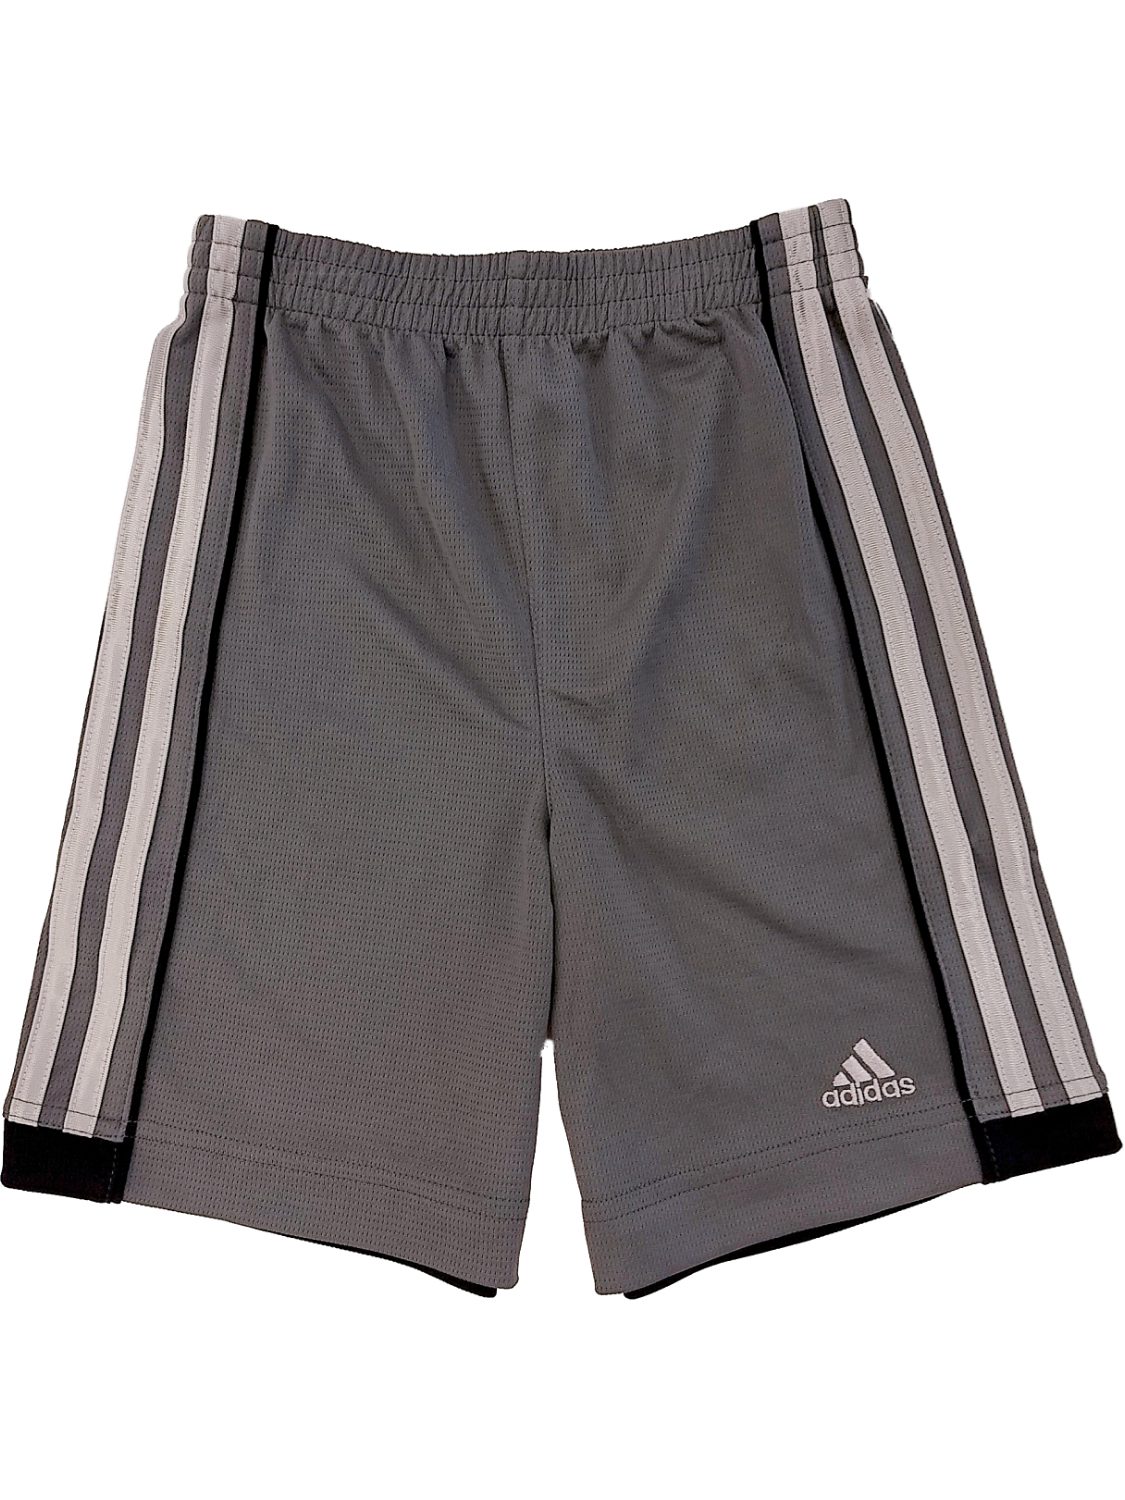 Adidas Climate Boys Gray Stripe Athletic Basketball Gym Shorts 4